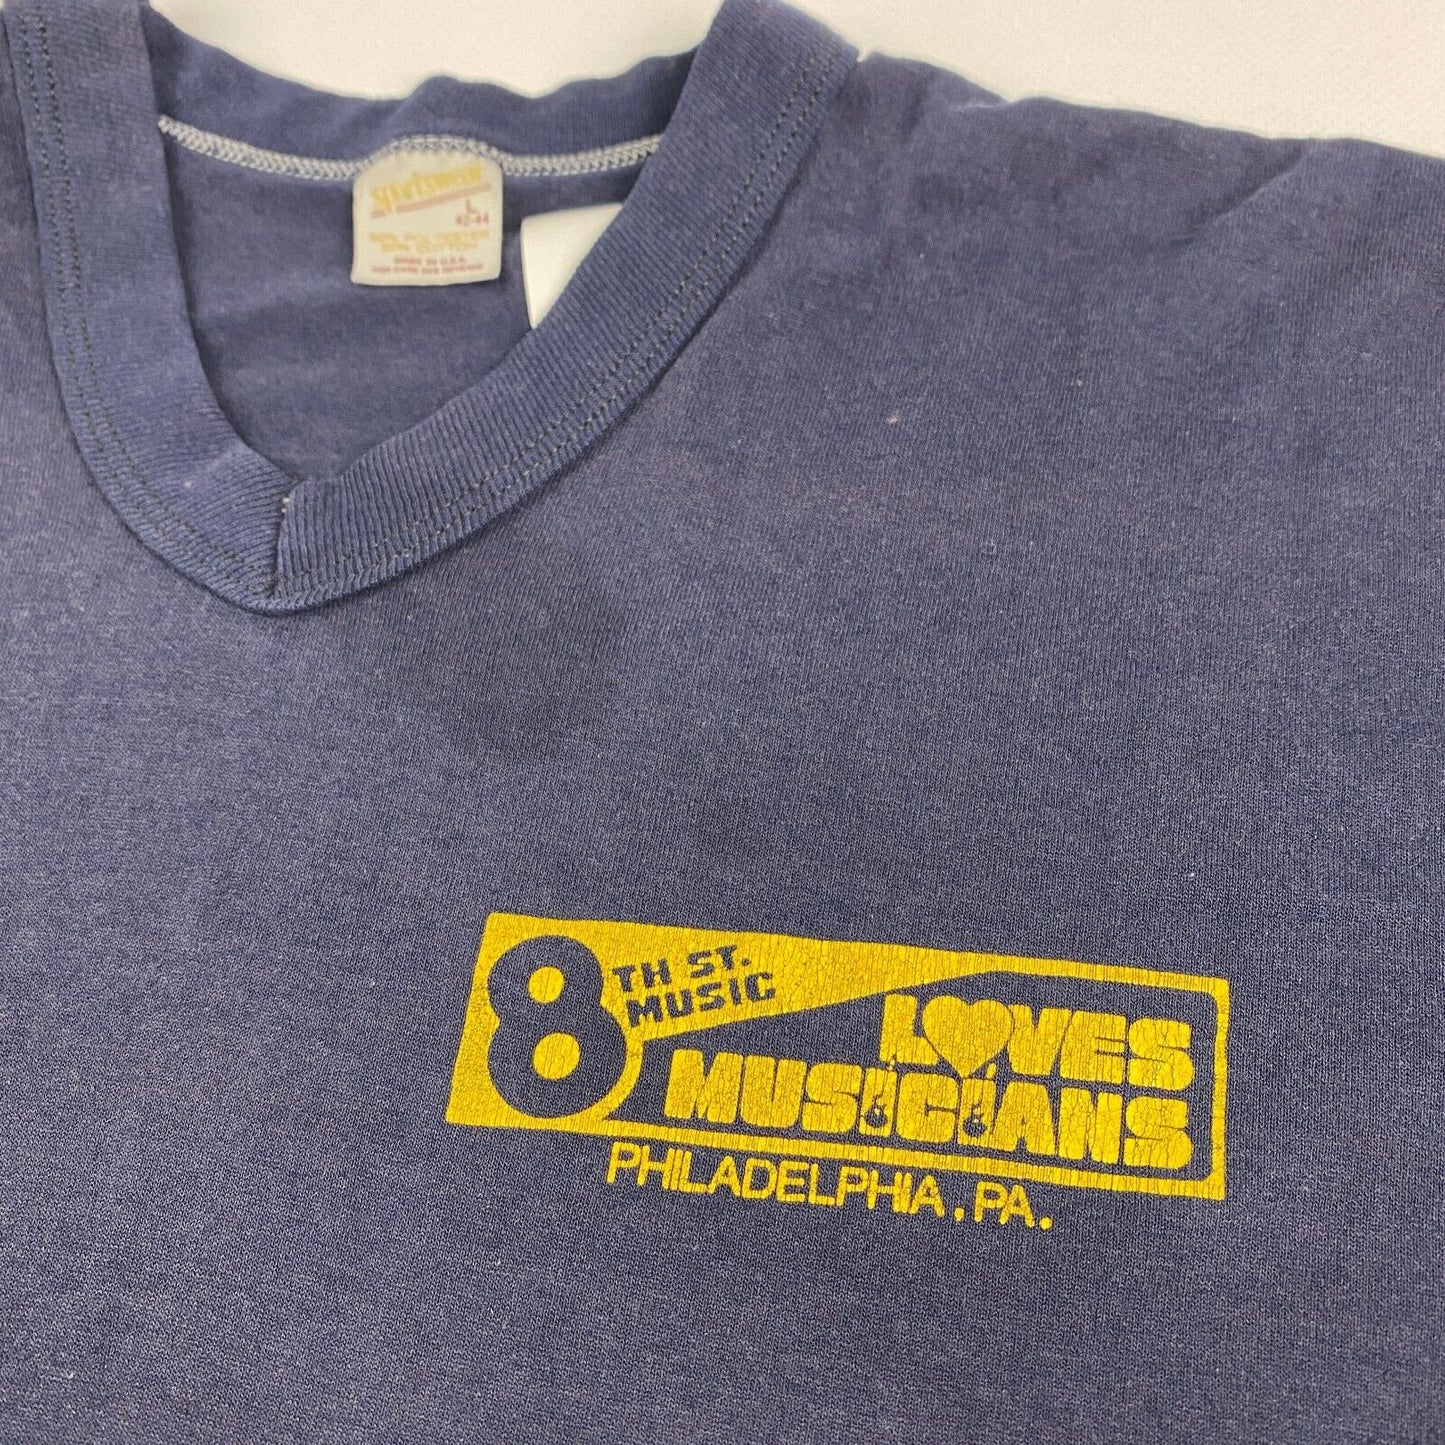 VINTAGE 80s 8th Street Music Philadelphia Navy Band T-Shirt sz Medium Men